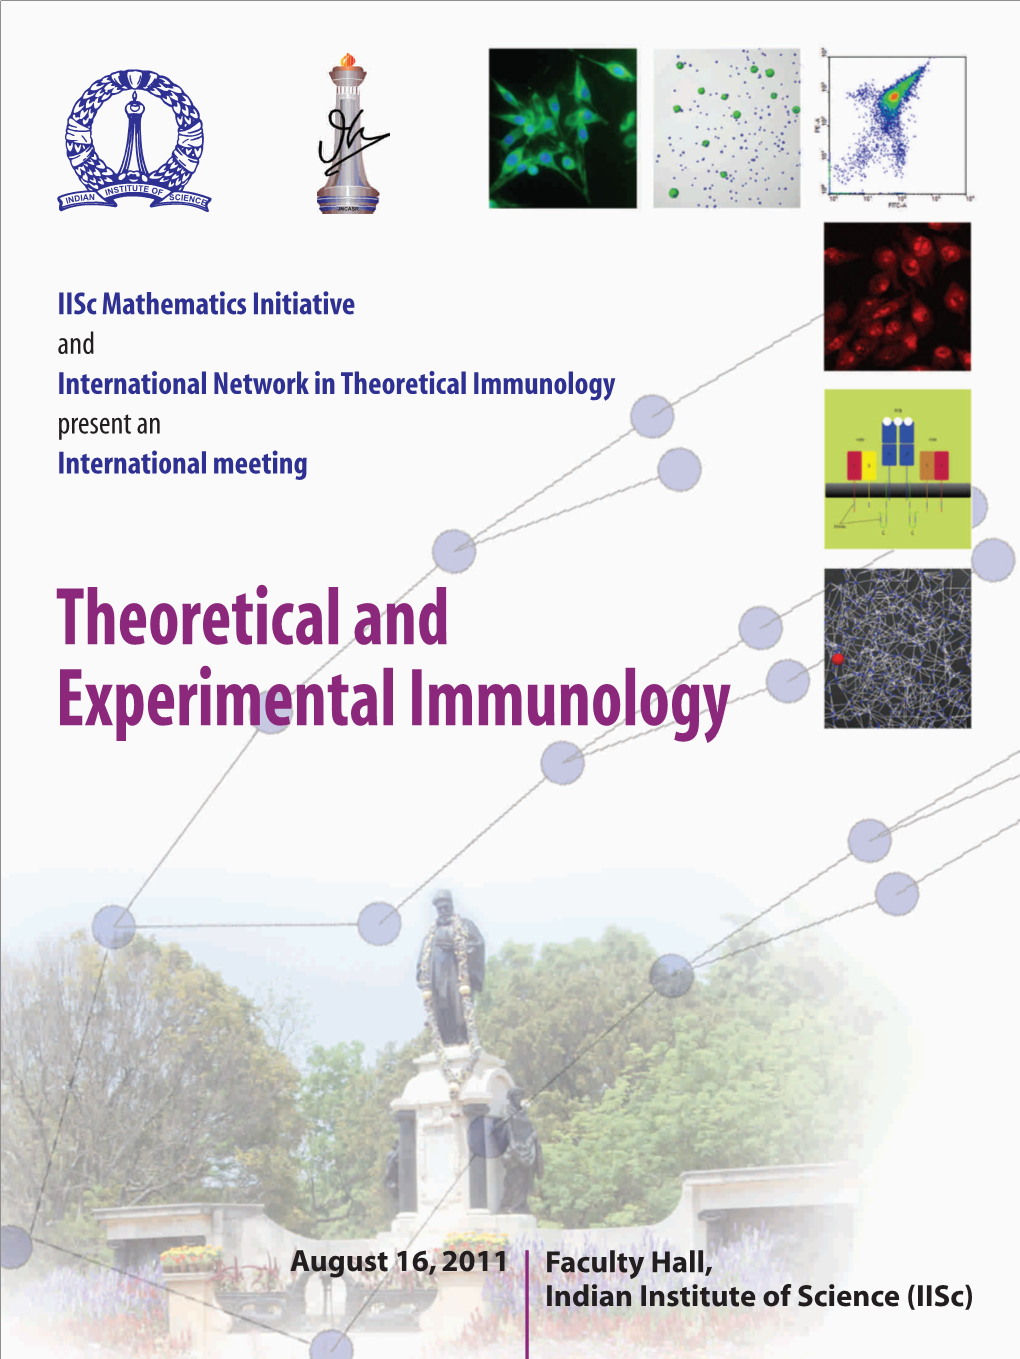 Iisc Mathematics Initiative and International Network in Theoretical Immunology Present an International Meeting